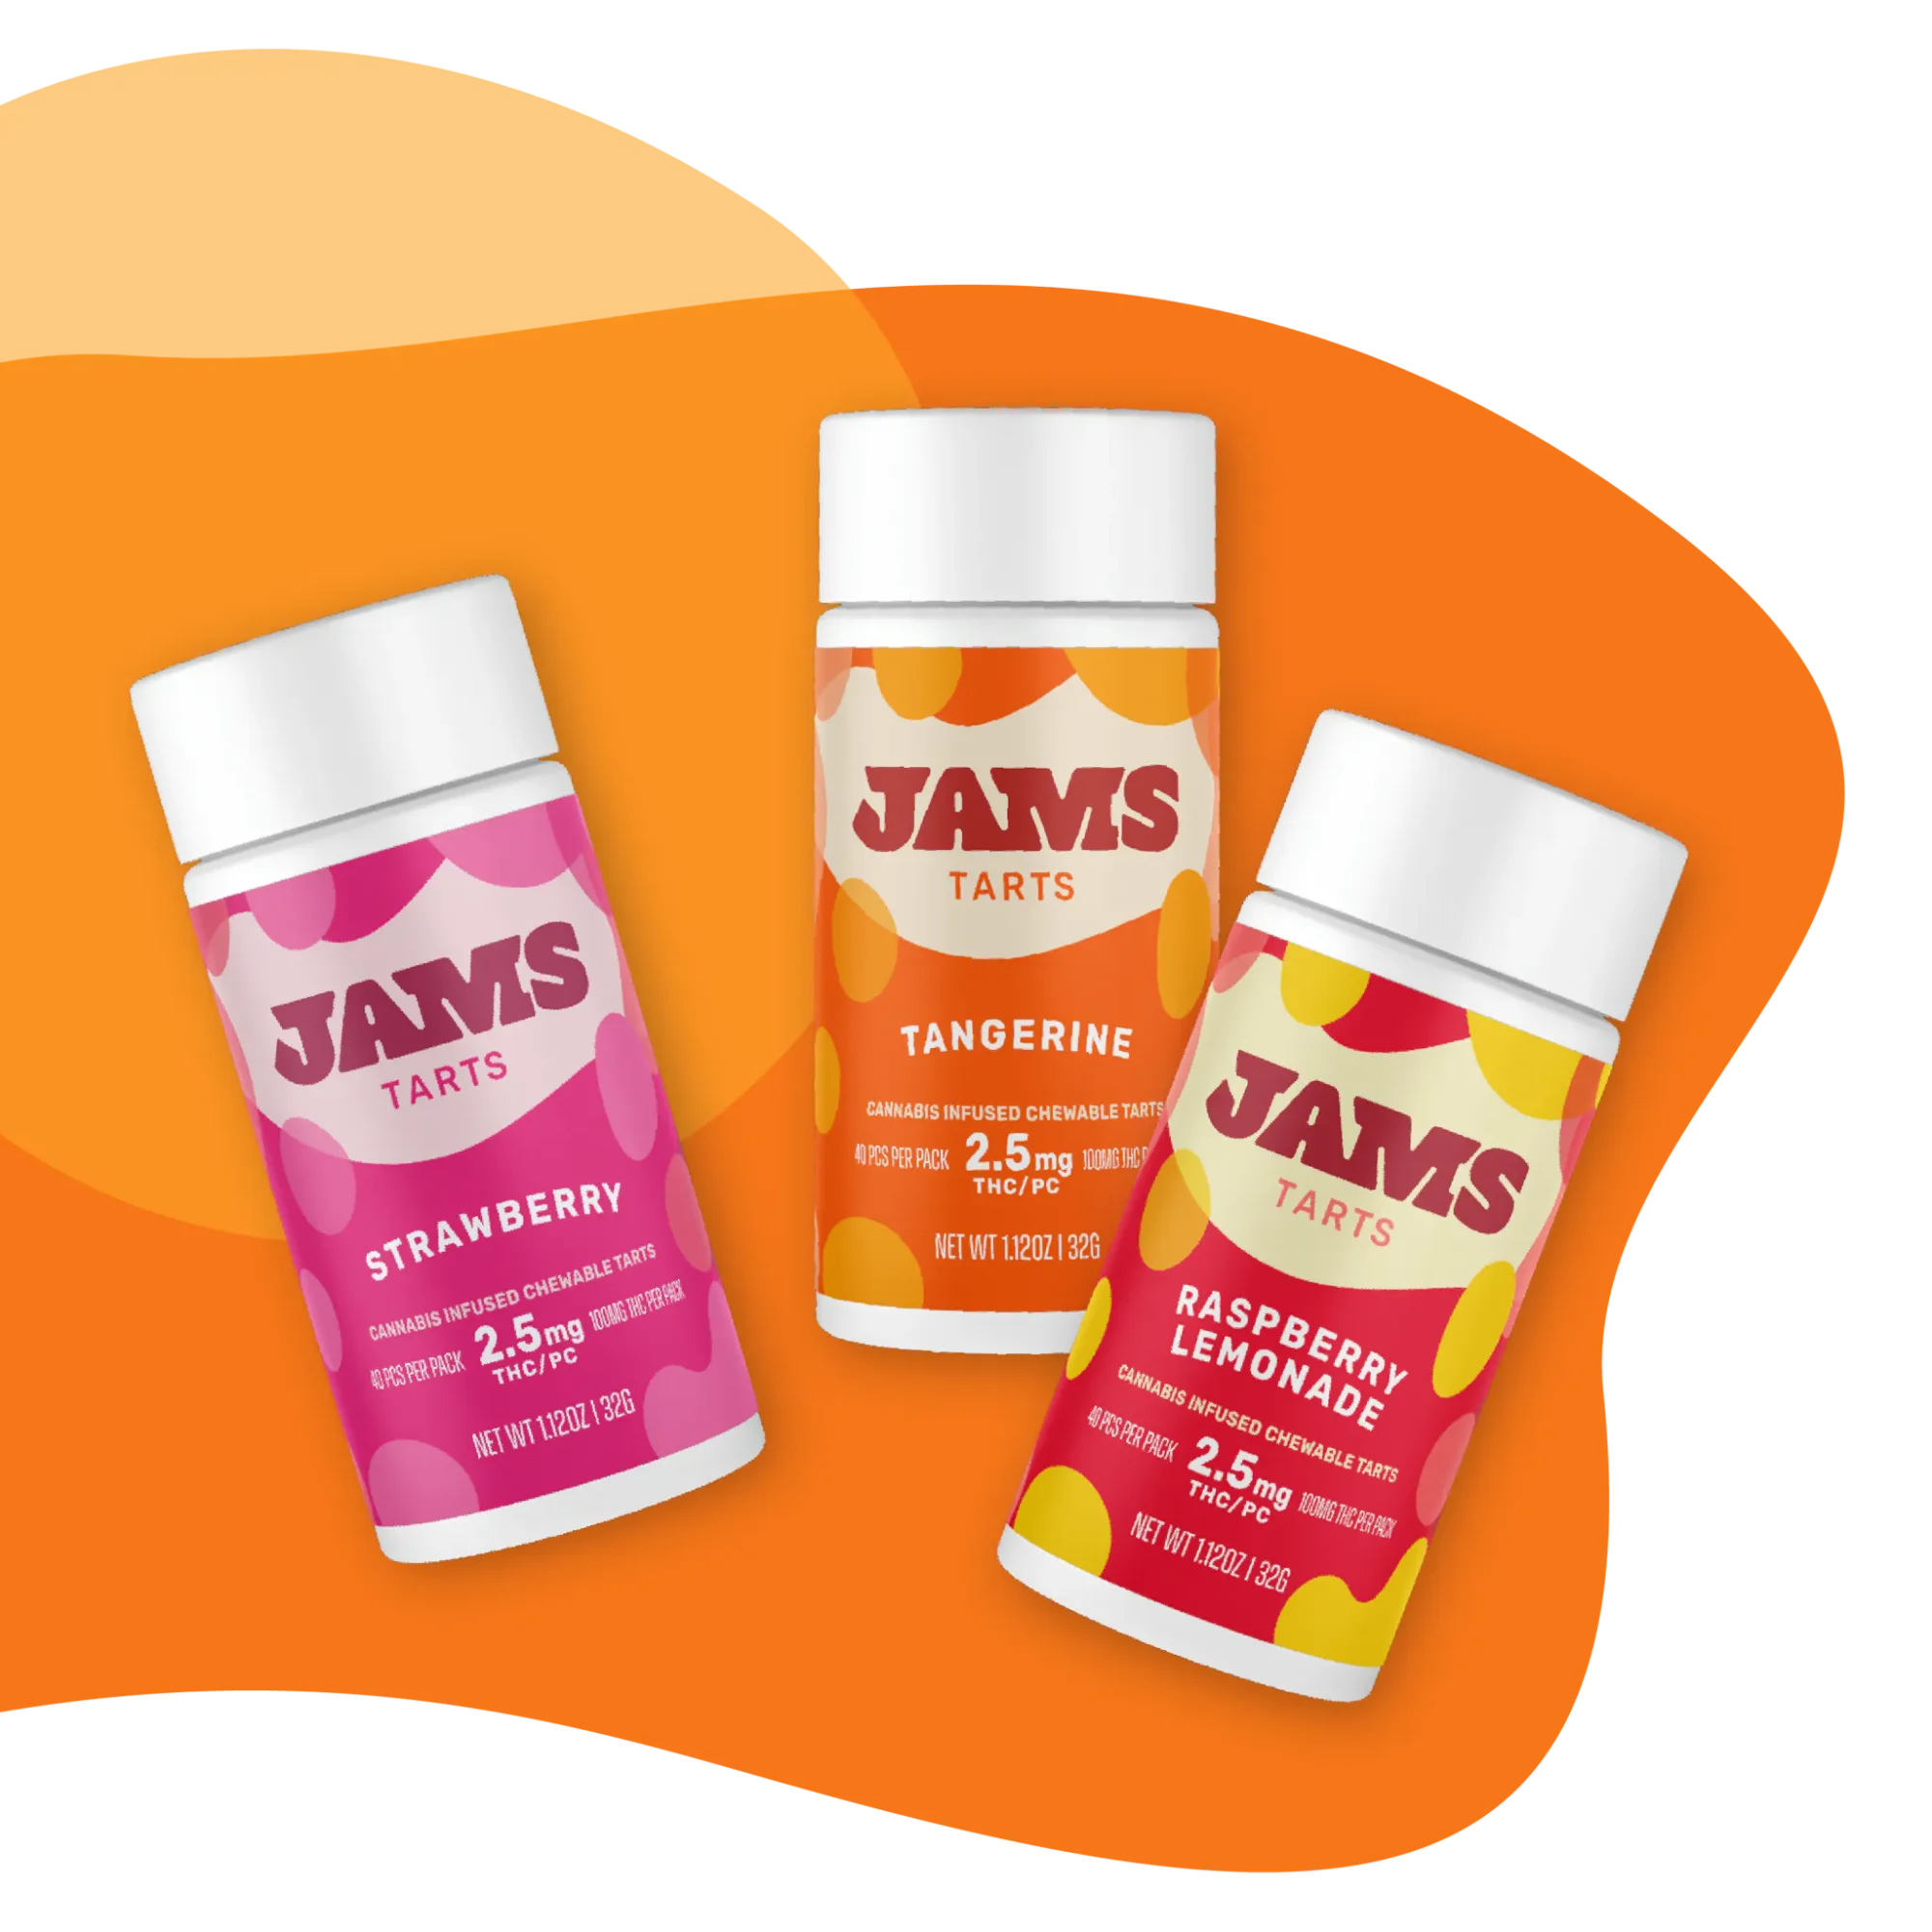 JAMS Tarts products